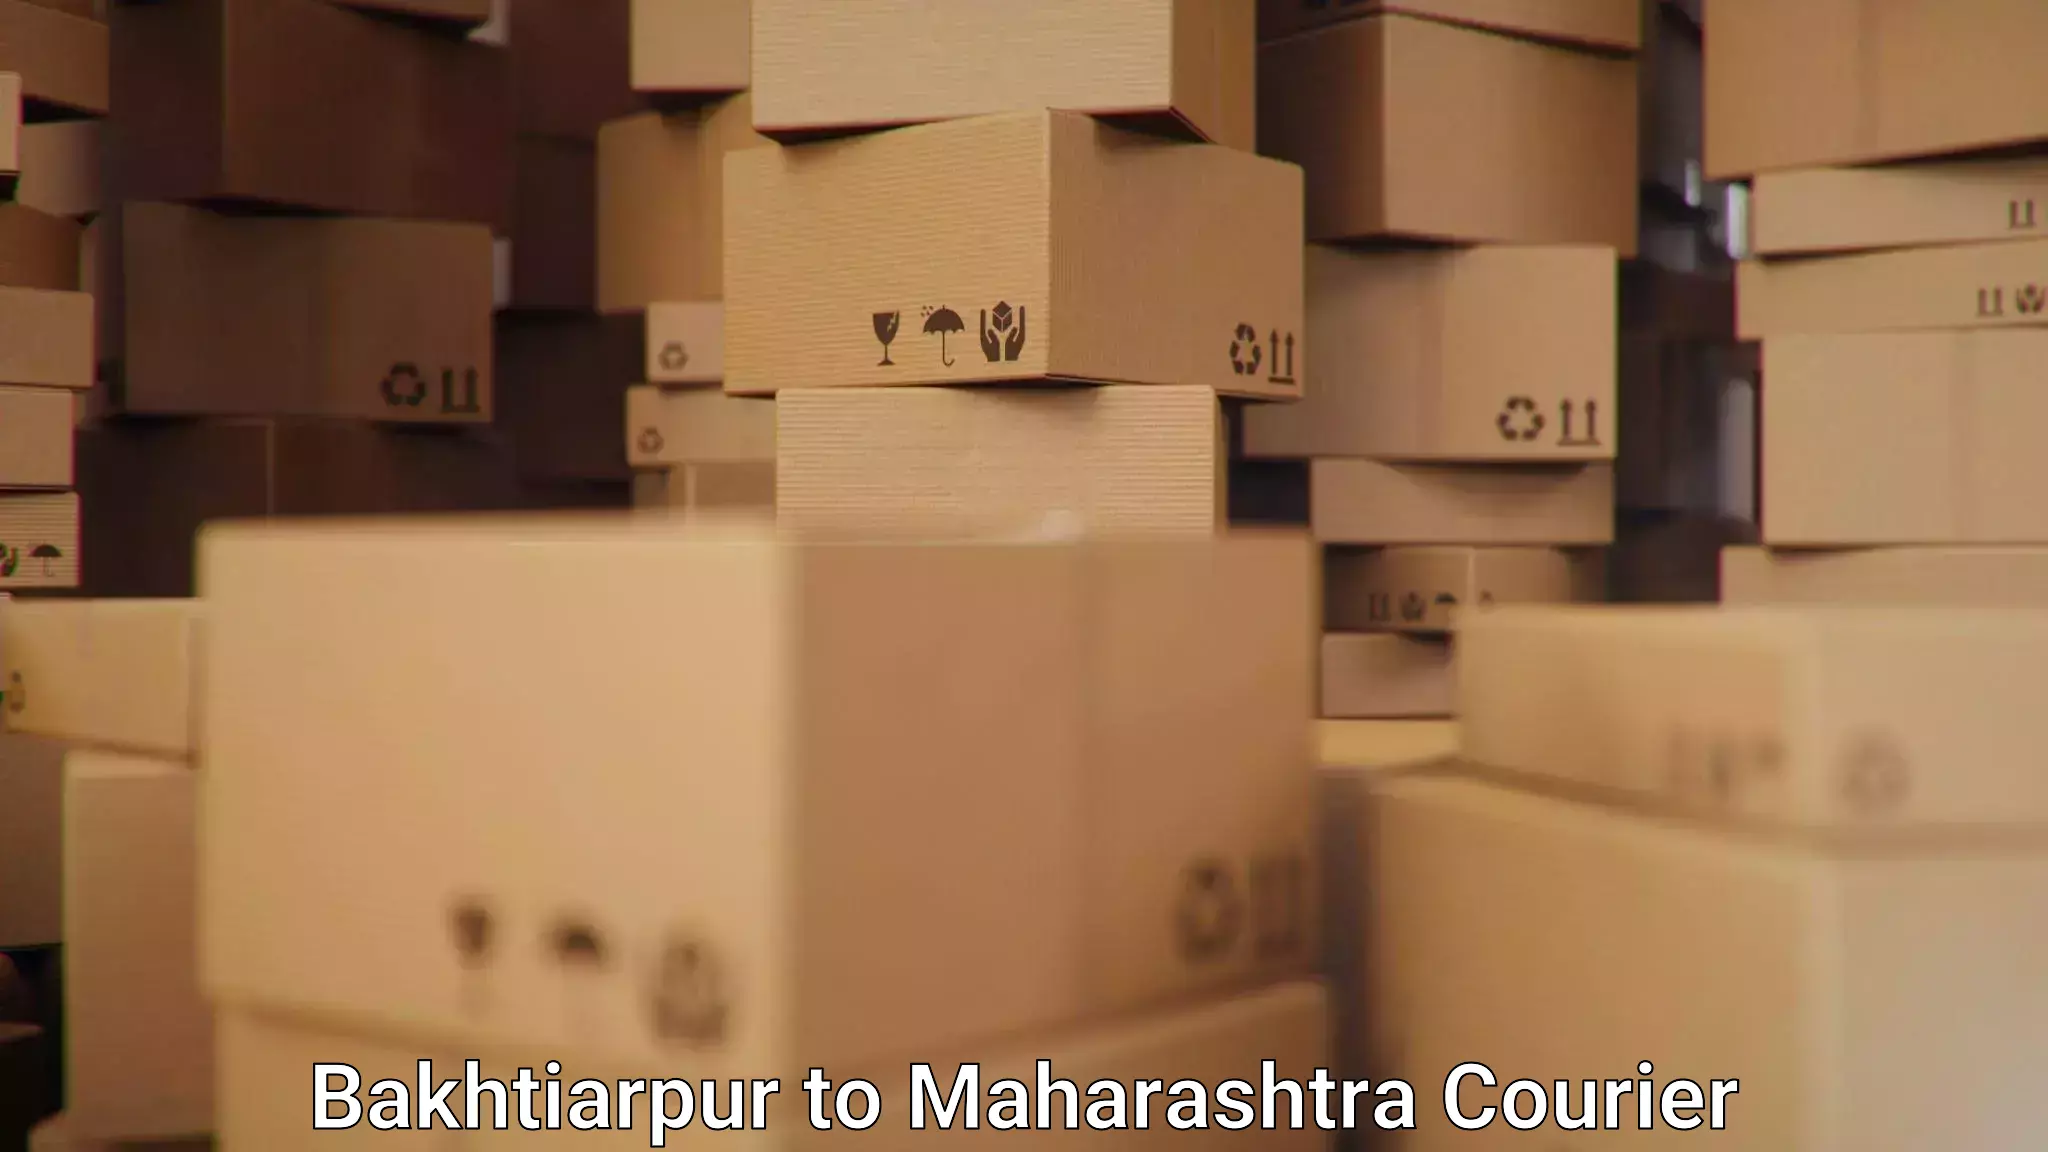 Courier service innovation Bakhtiarpur to Rahuri